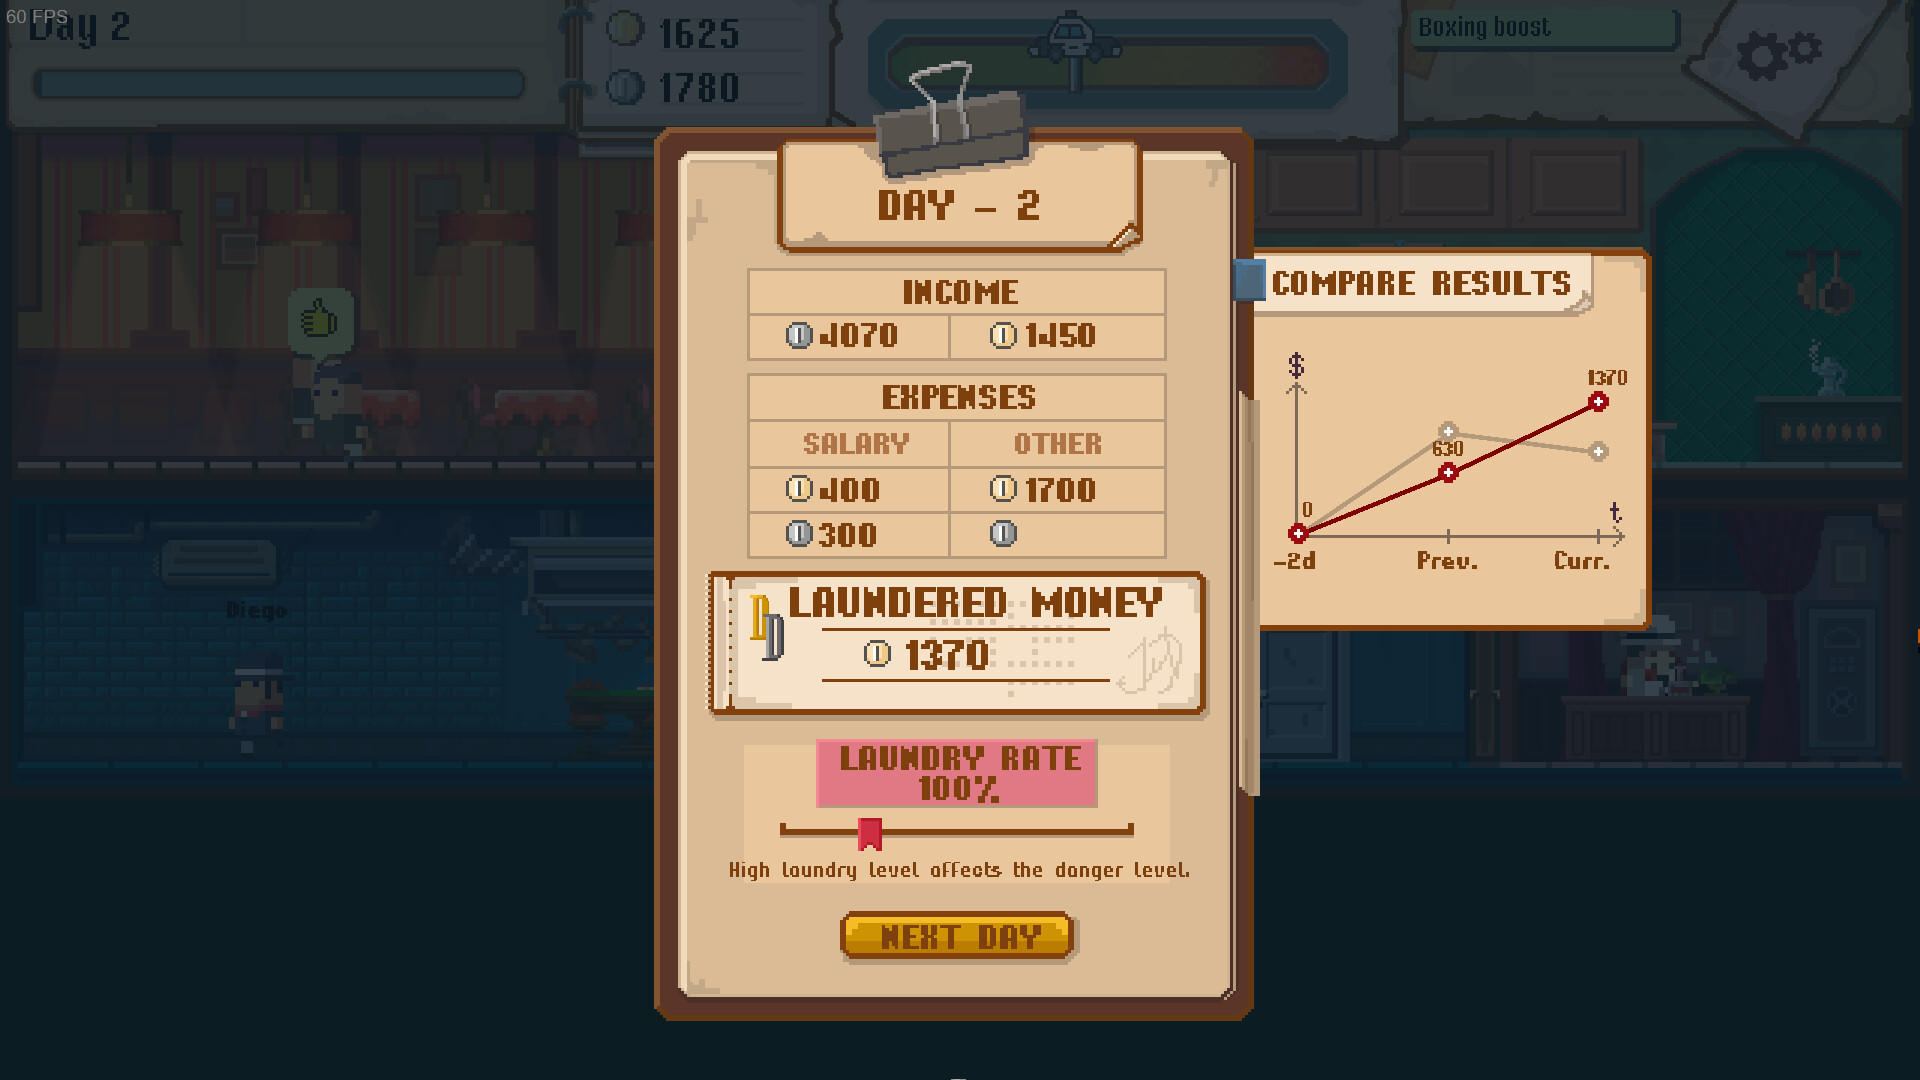 Initiation screenshot game